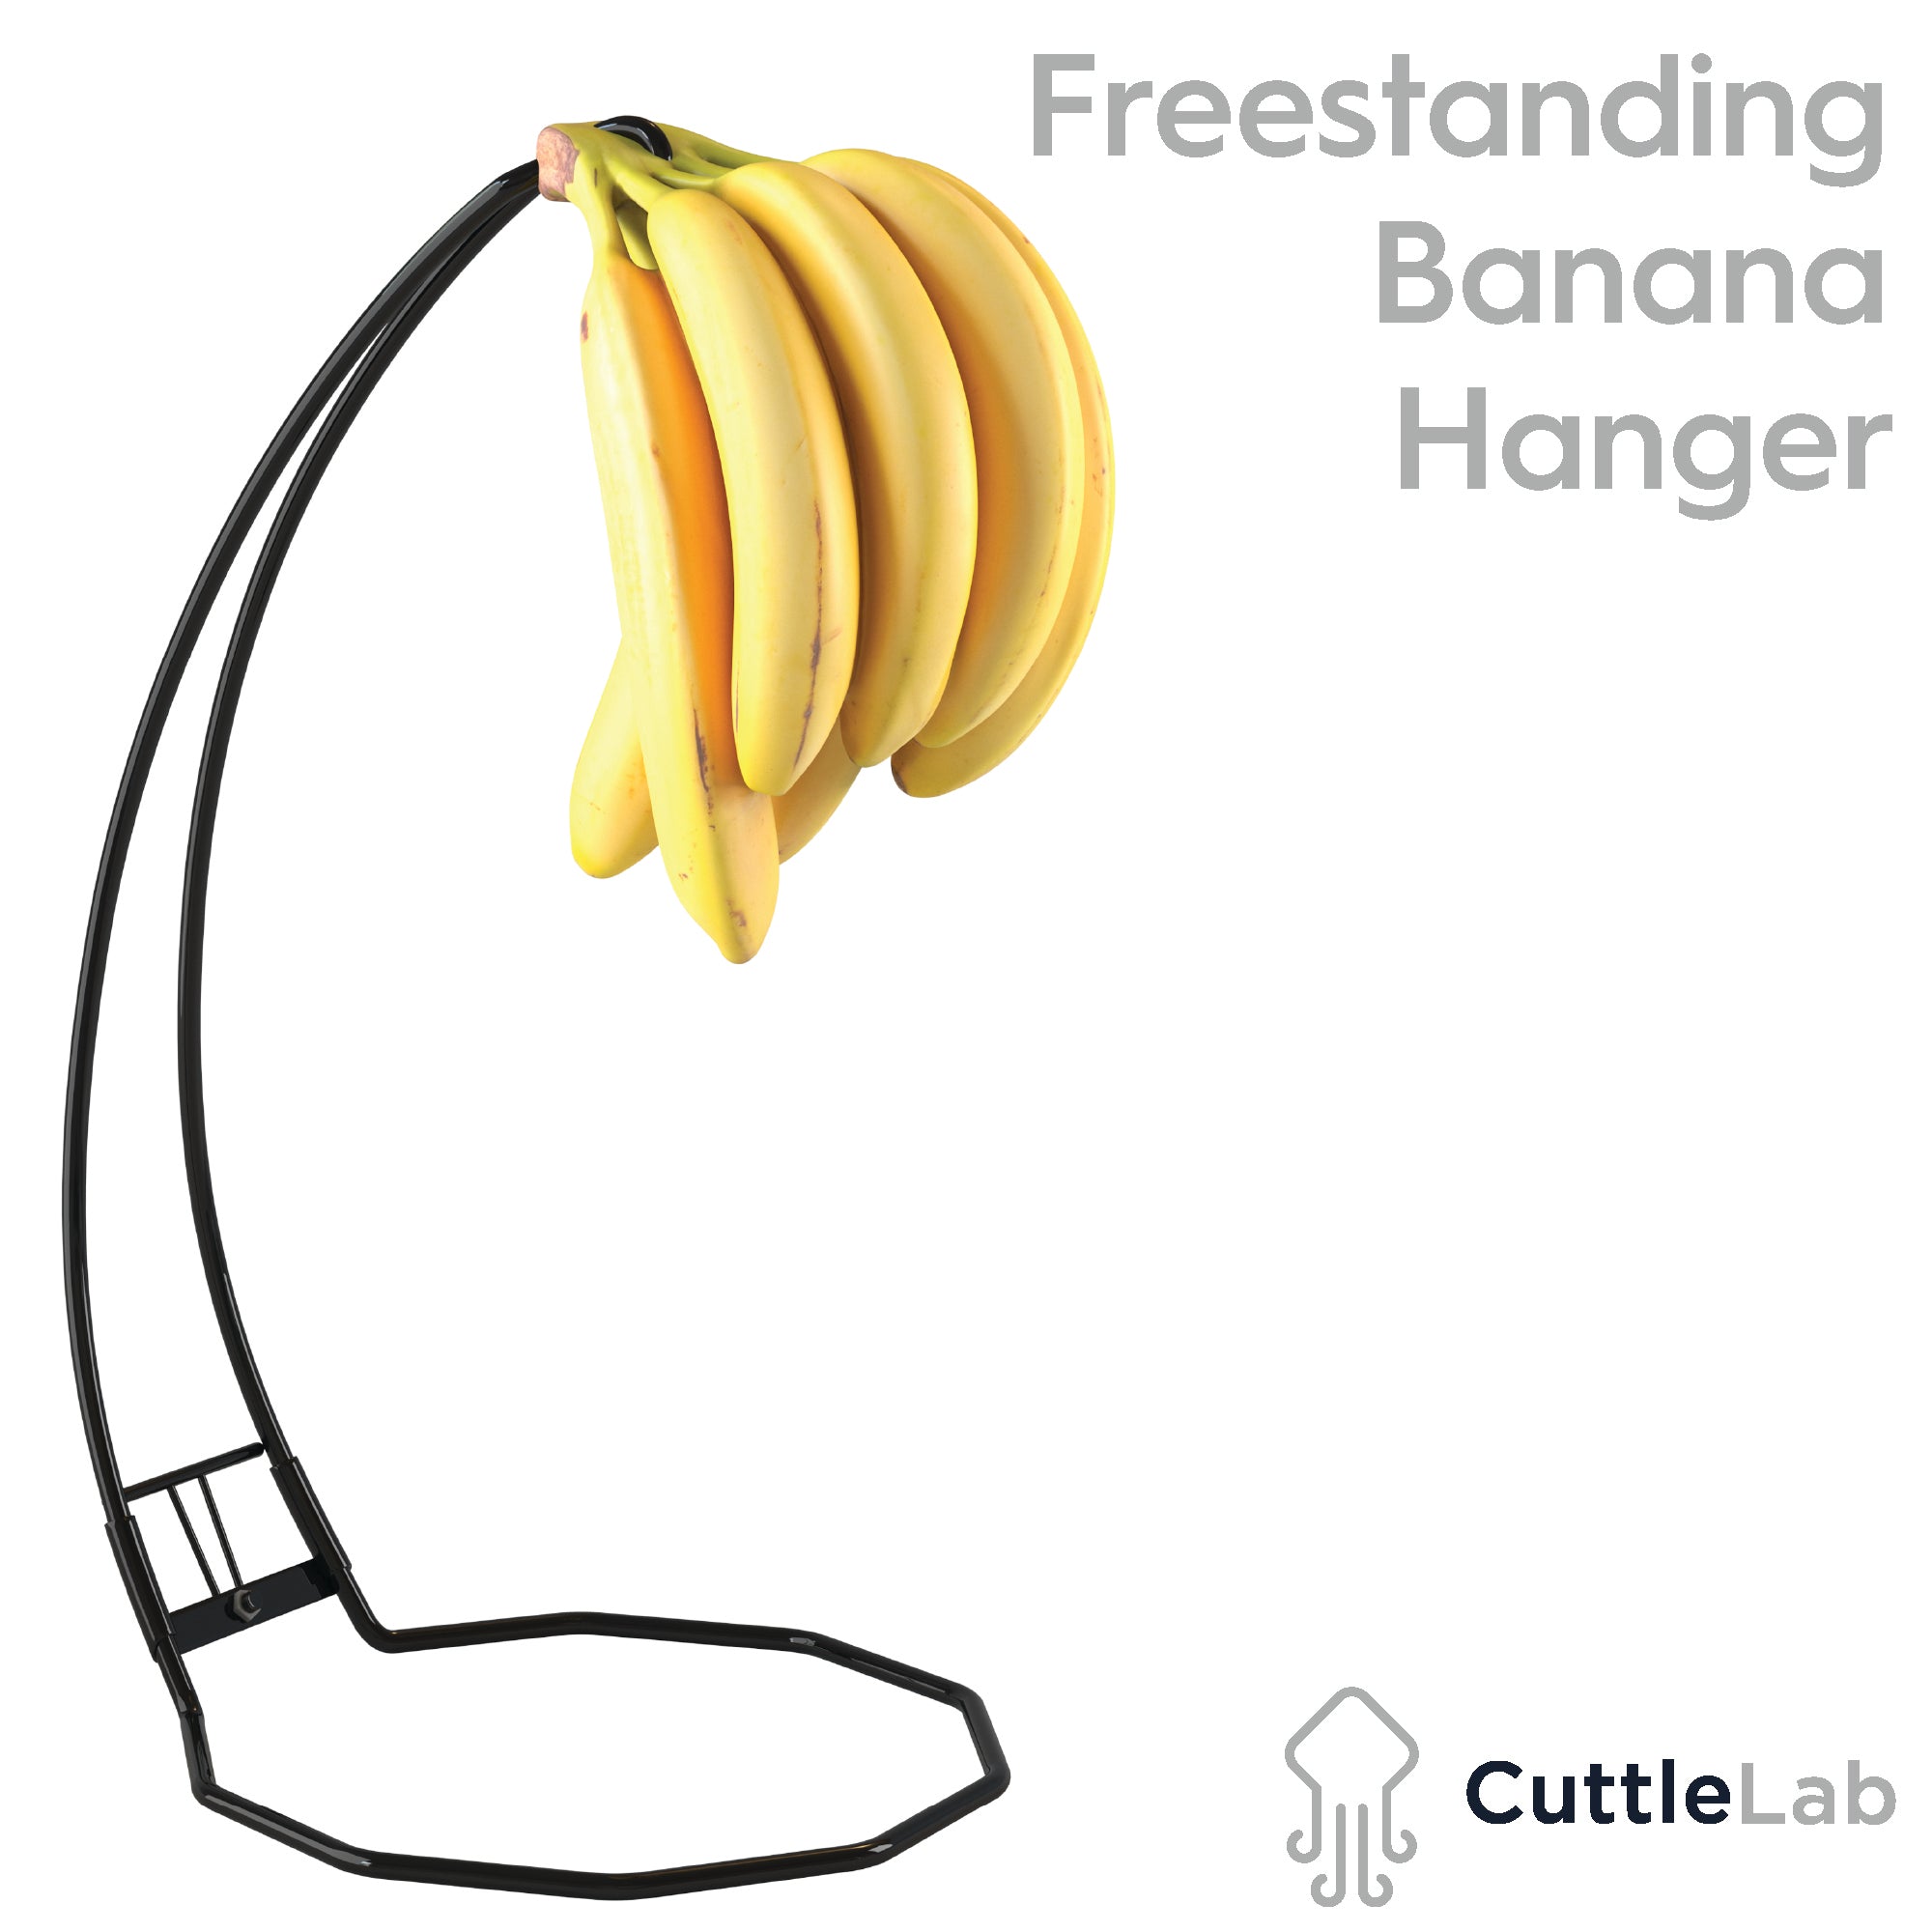 2-Tier Fruit Basket and Banana Hanger – CuttleLab